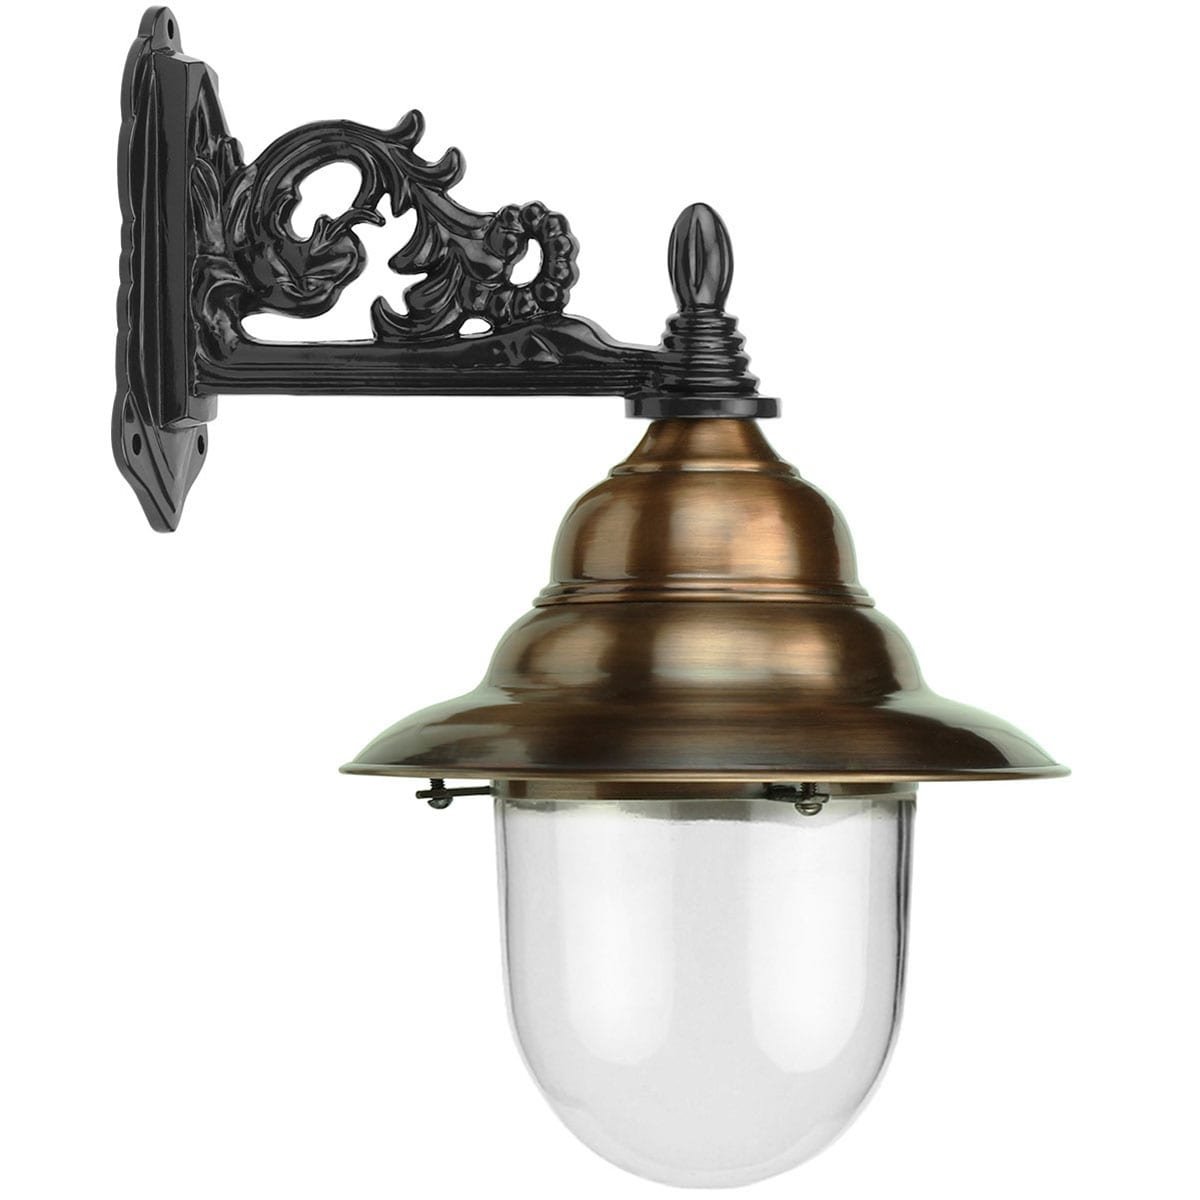 Stallampe hängen kupfer Strijen - 52 cm